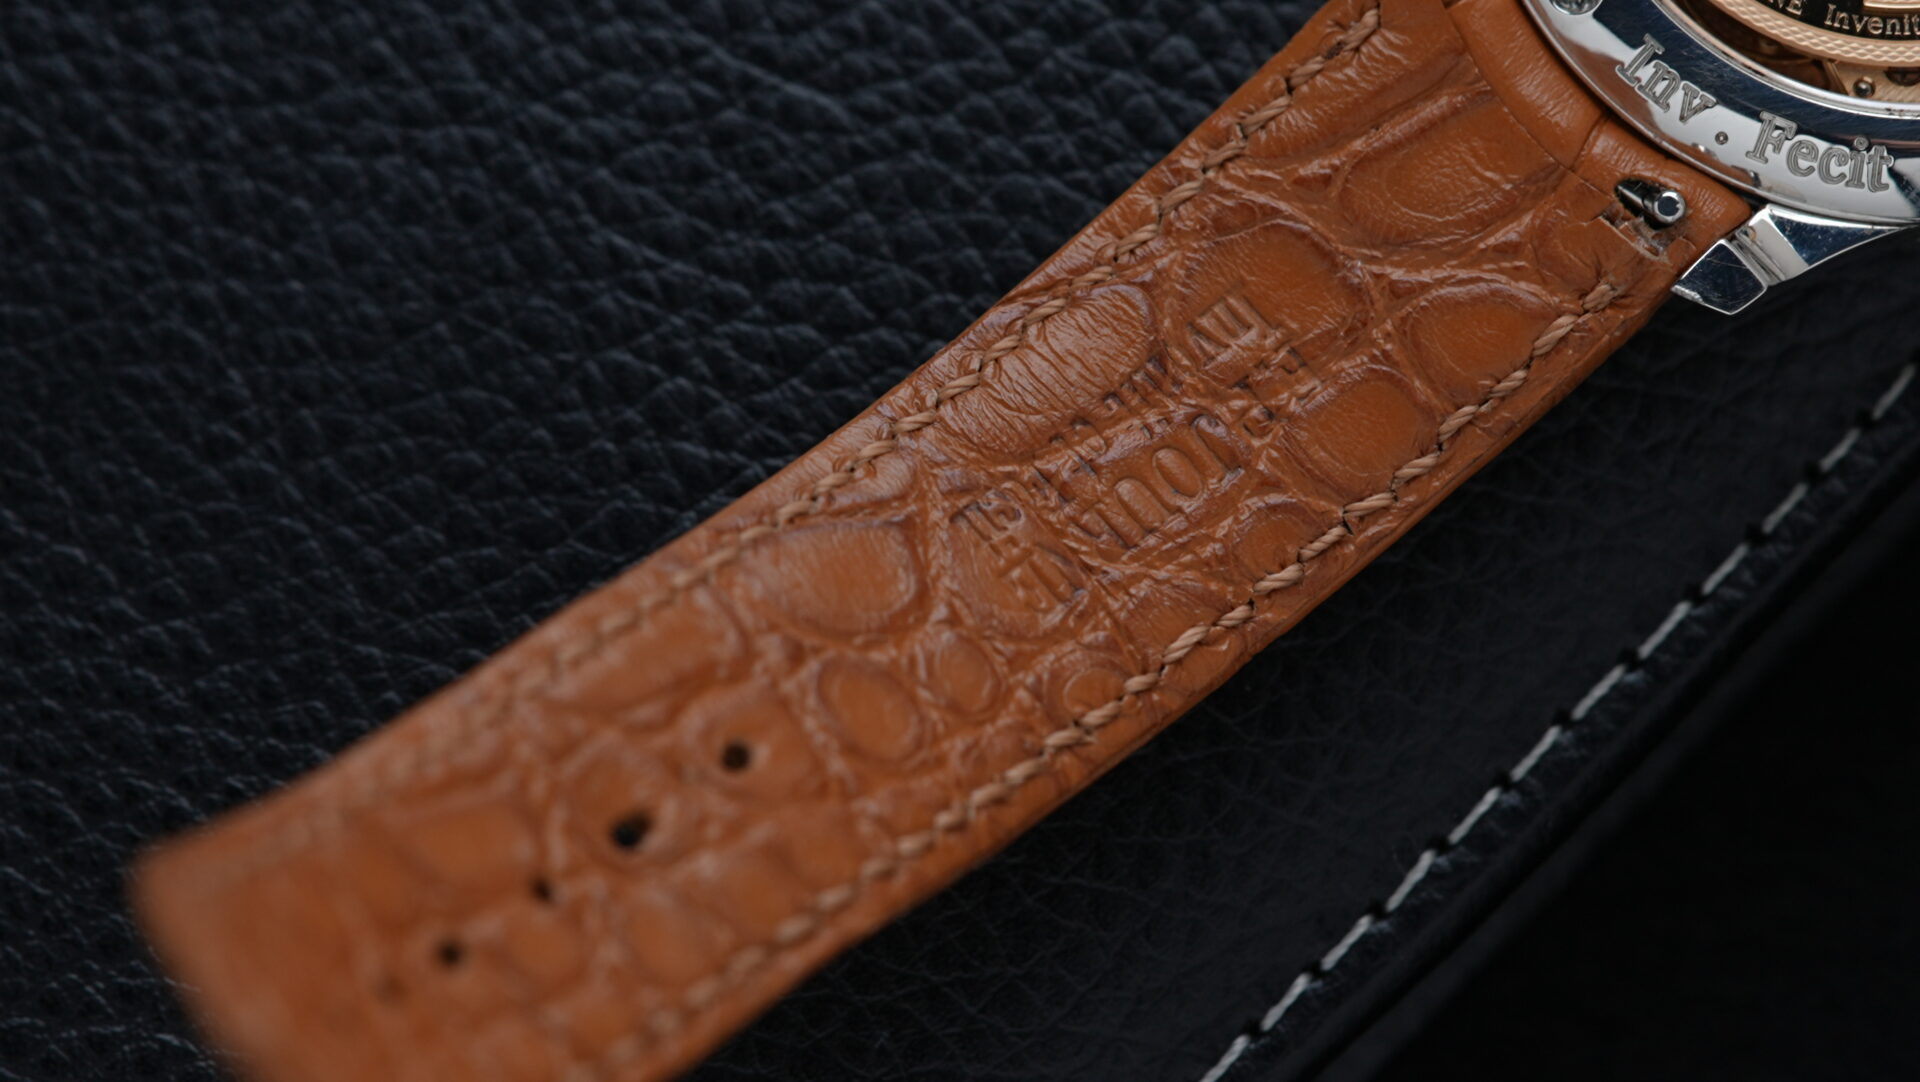 Inside of strap showing brand name original strap of the F.P.Journe Octa AUTOMATIQUE RÉSERVE HAVANA wristwatch.